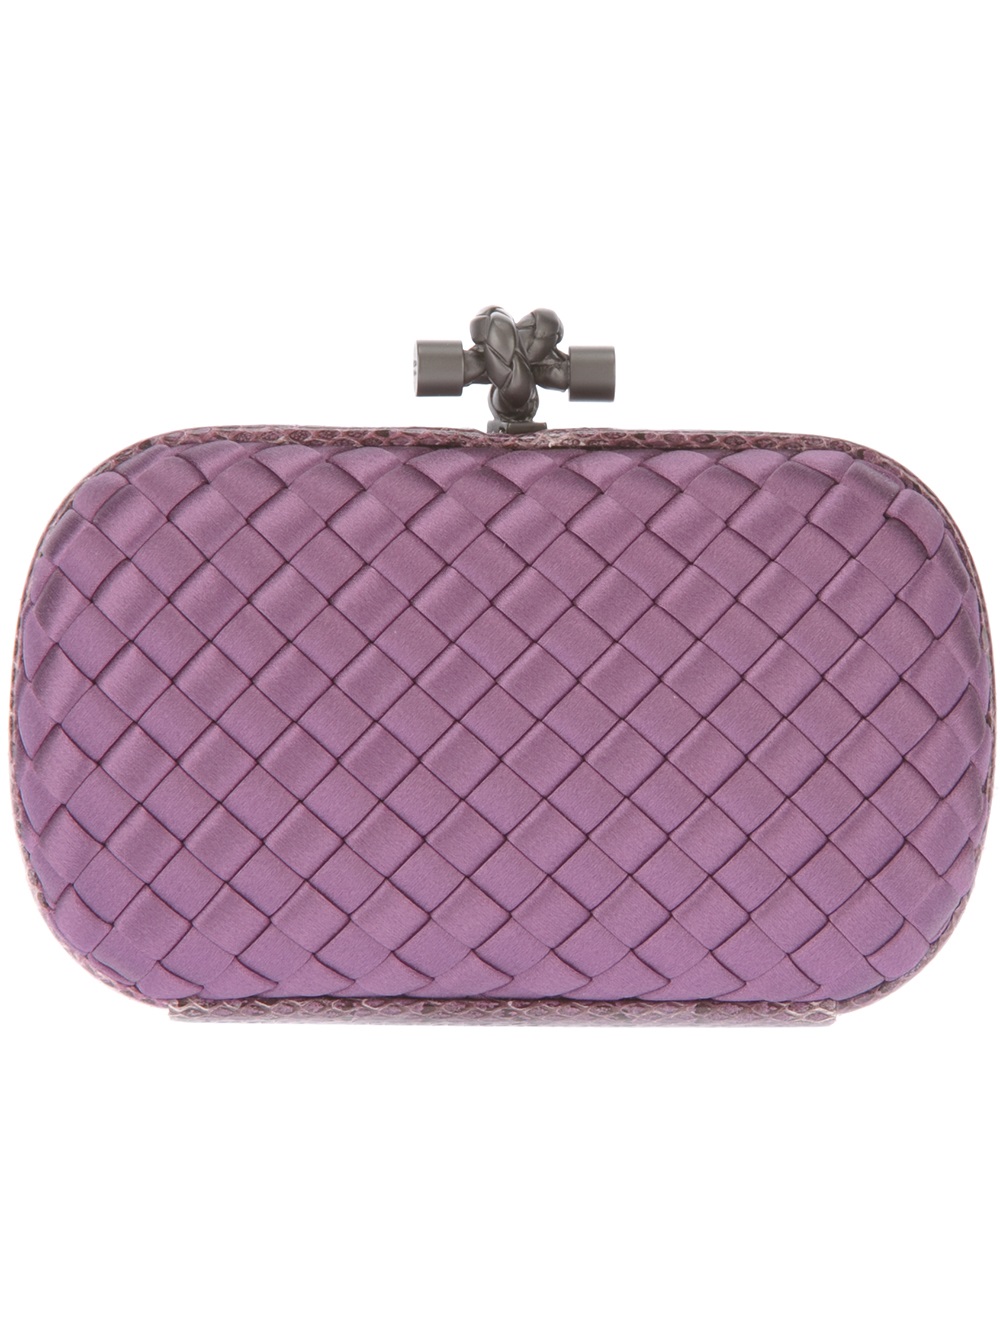 Lyst - Bottega veneta 'knot' Box Clutch in Purple